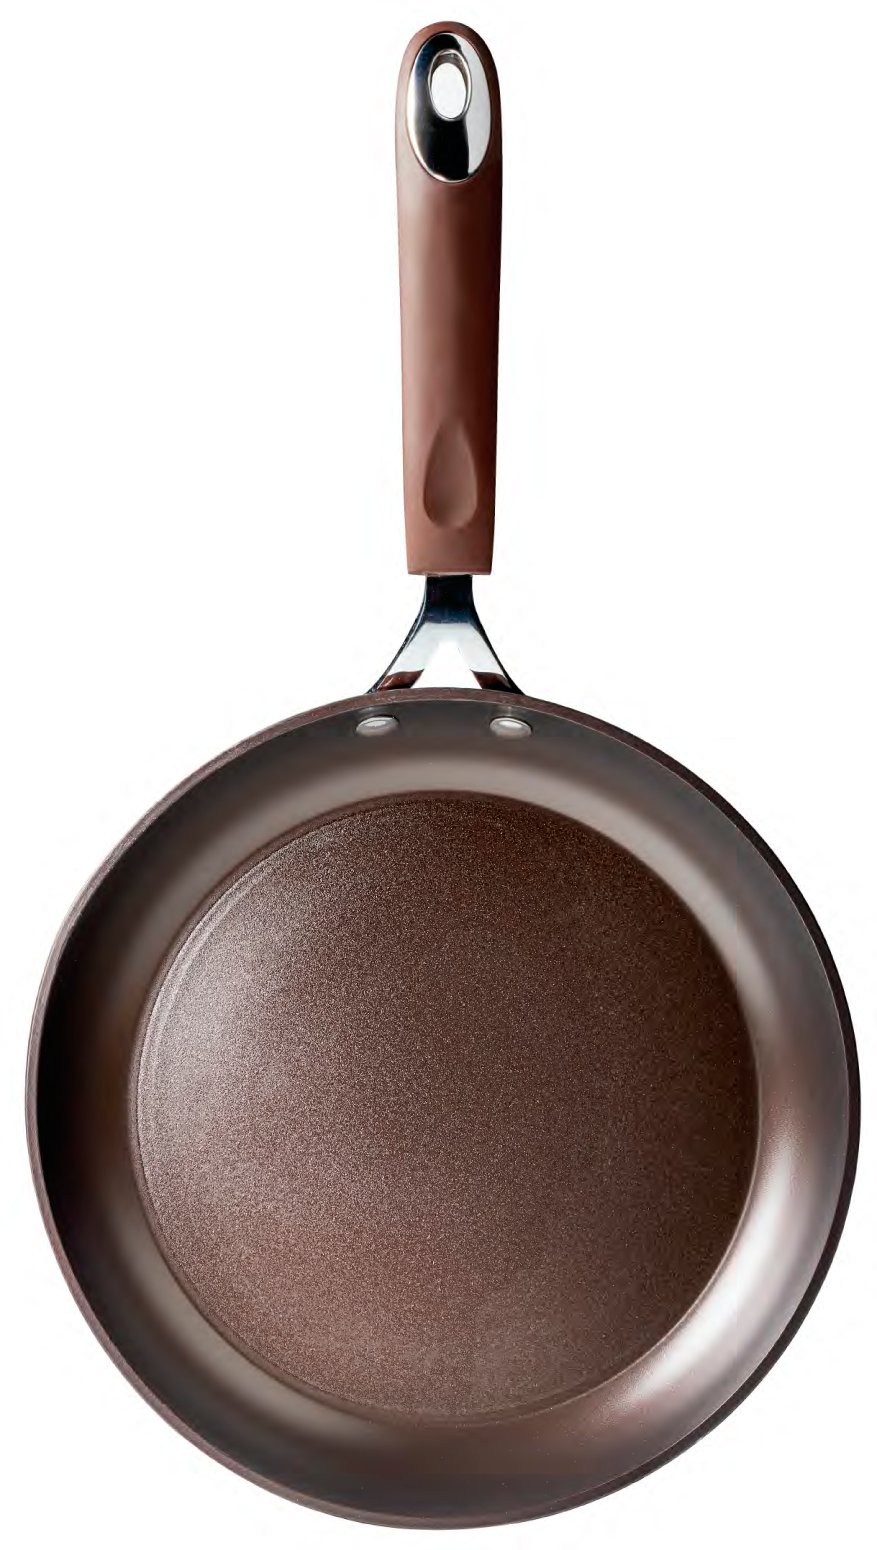 T-fal Culinaire Series Nonstick Fry Pan & Griddle - Black - Shop Frying Pans  & Griddles at H-E-B